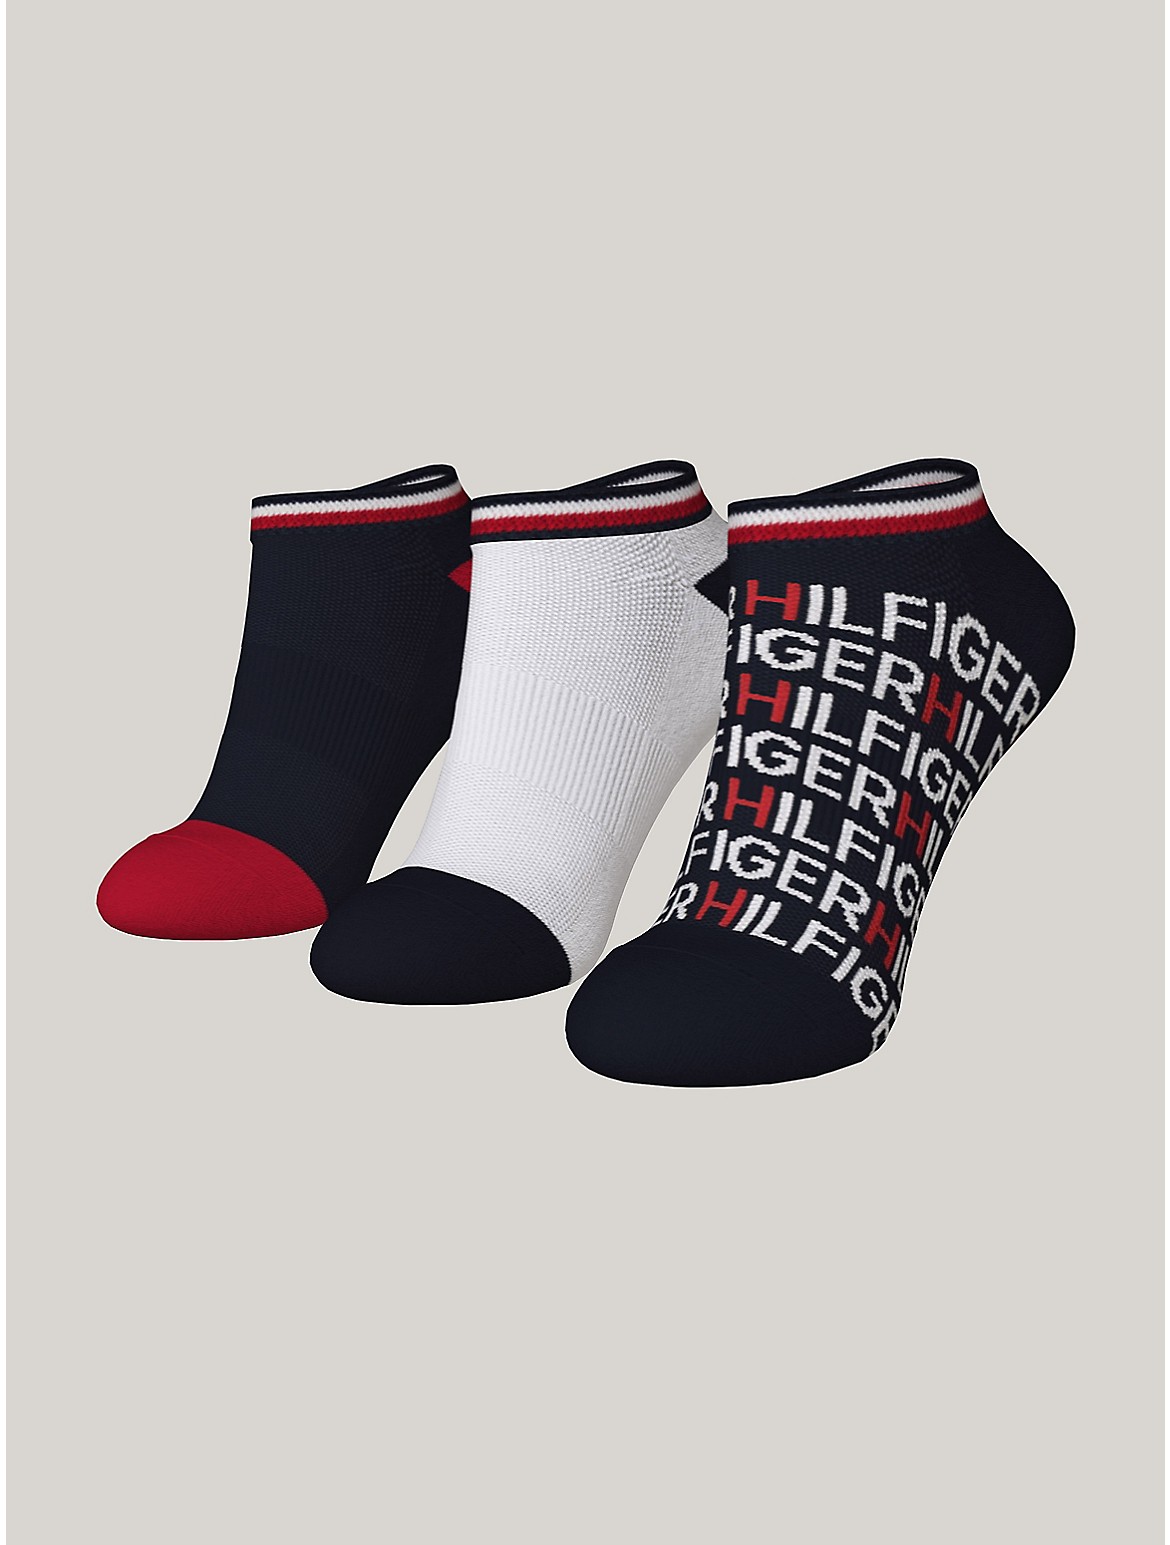 Tommy Hilfiger Women's Ankle Sock 3-Pack